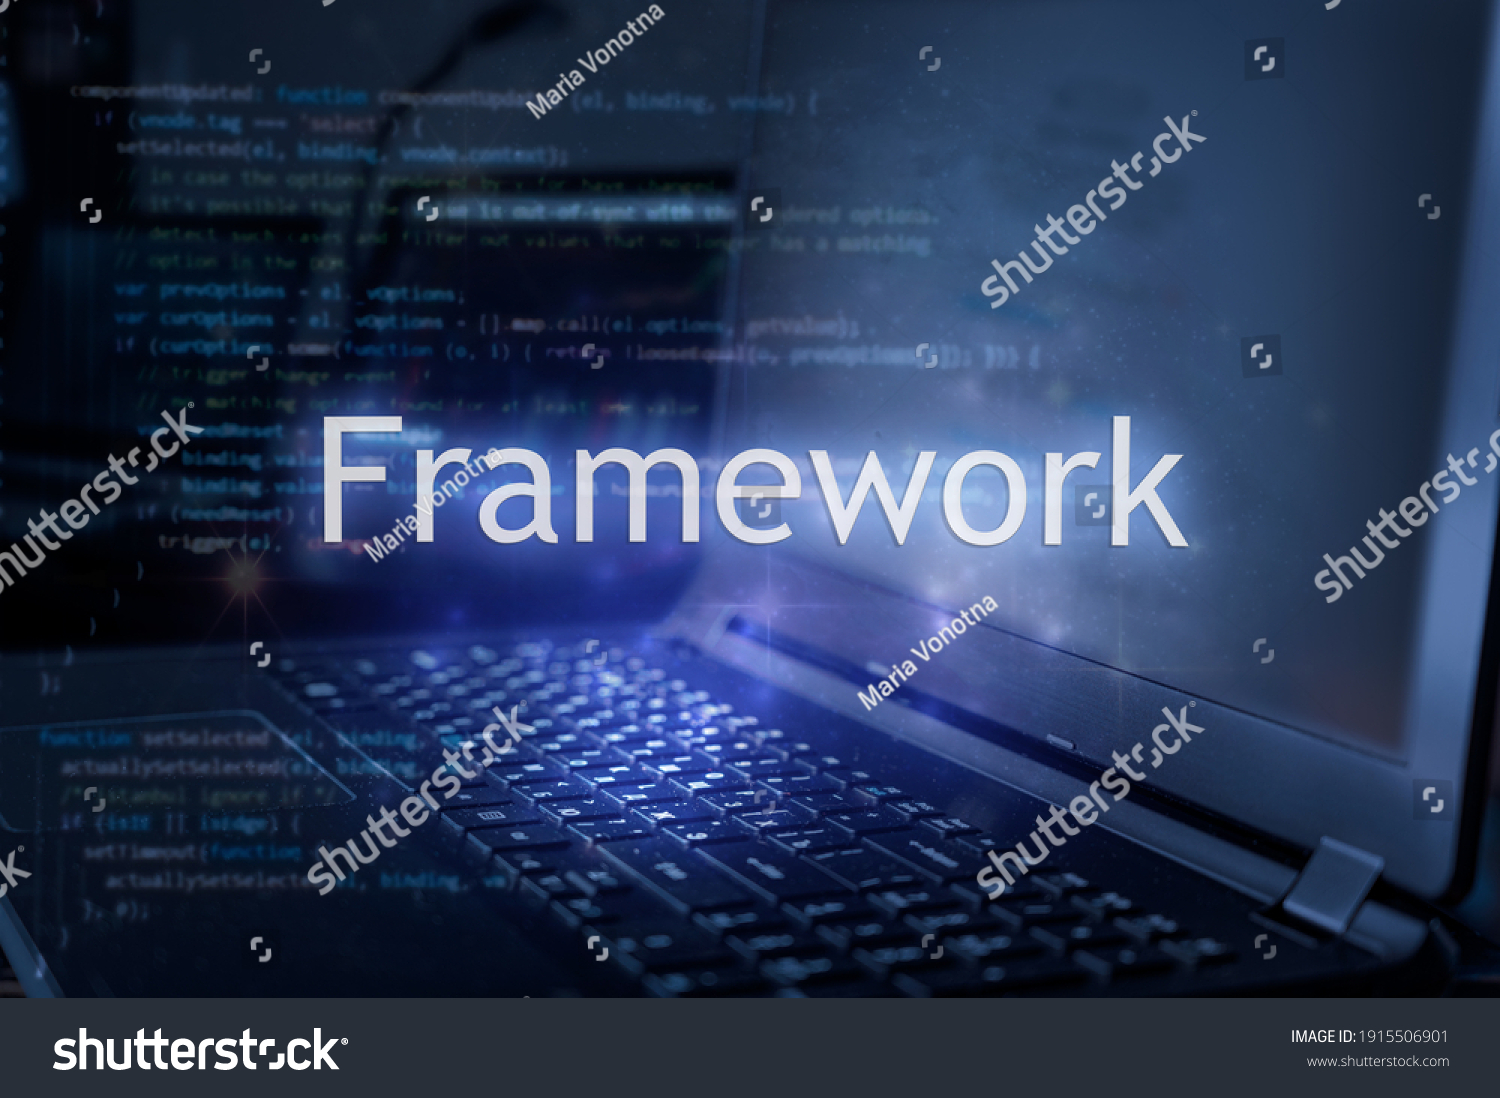 Framework inscription against laptop and code background. Technology concept. #1915506901